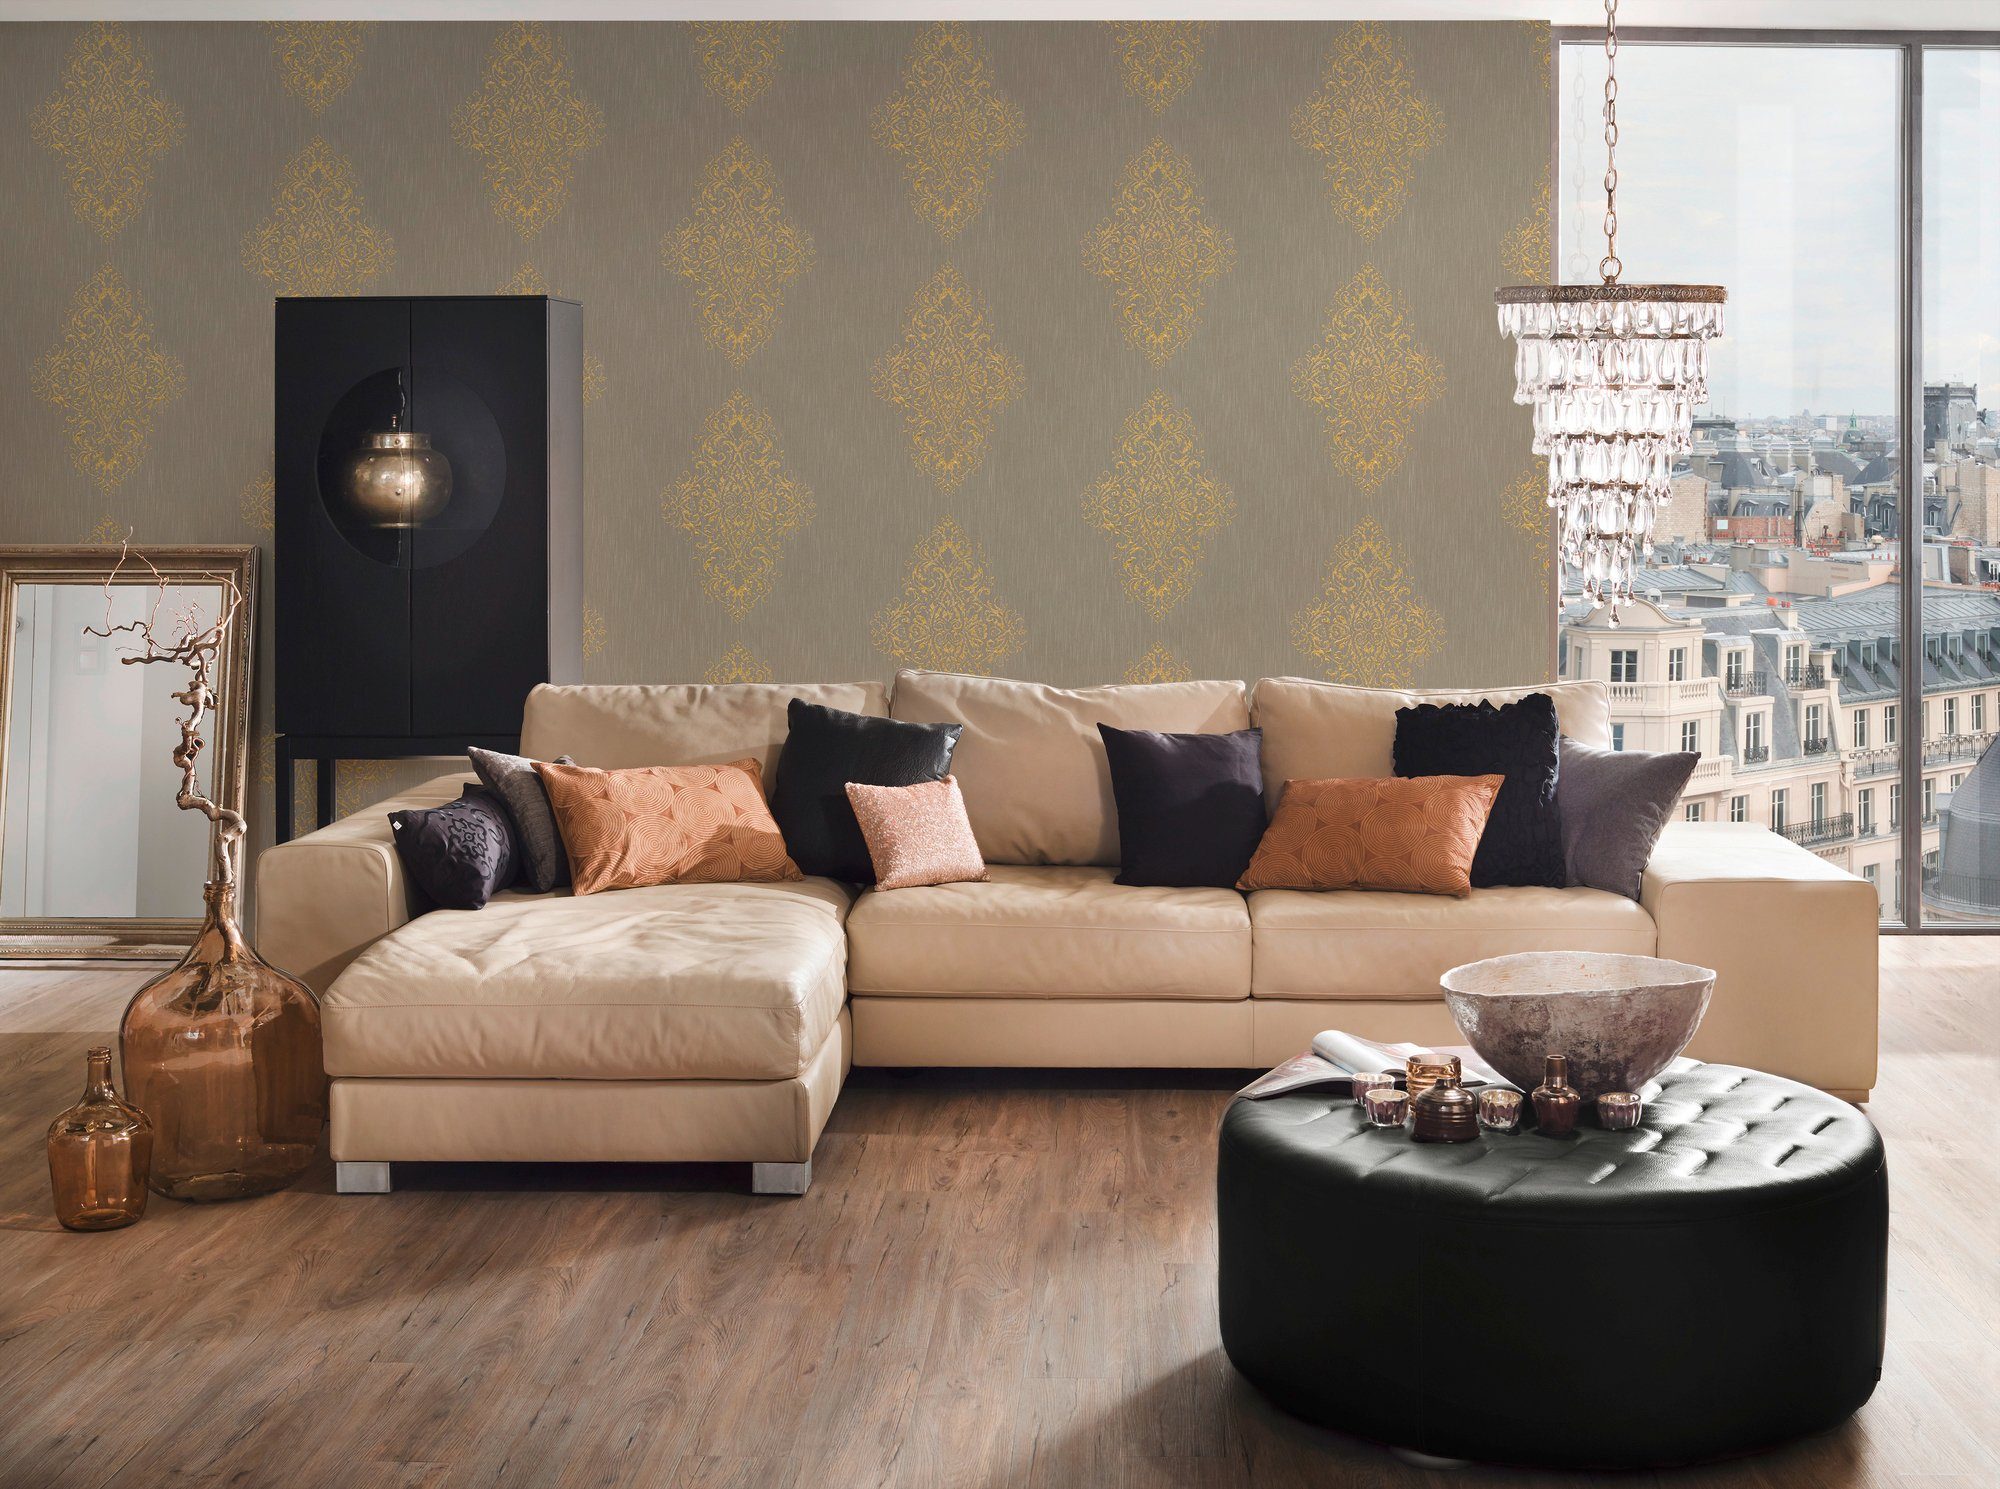 Effekt Textil Barock wallpaper, Luxury Metallic Tapete Textiltapete Barock, samtig, Architects beige/gold Paper